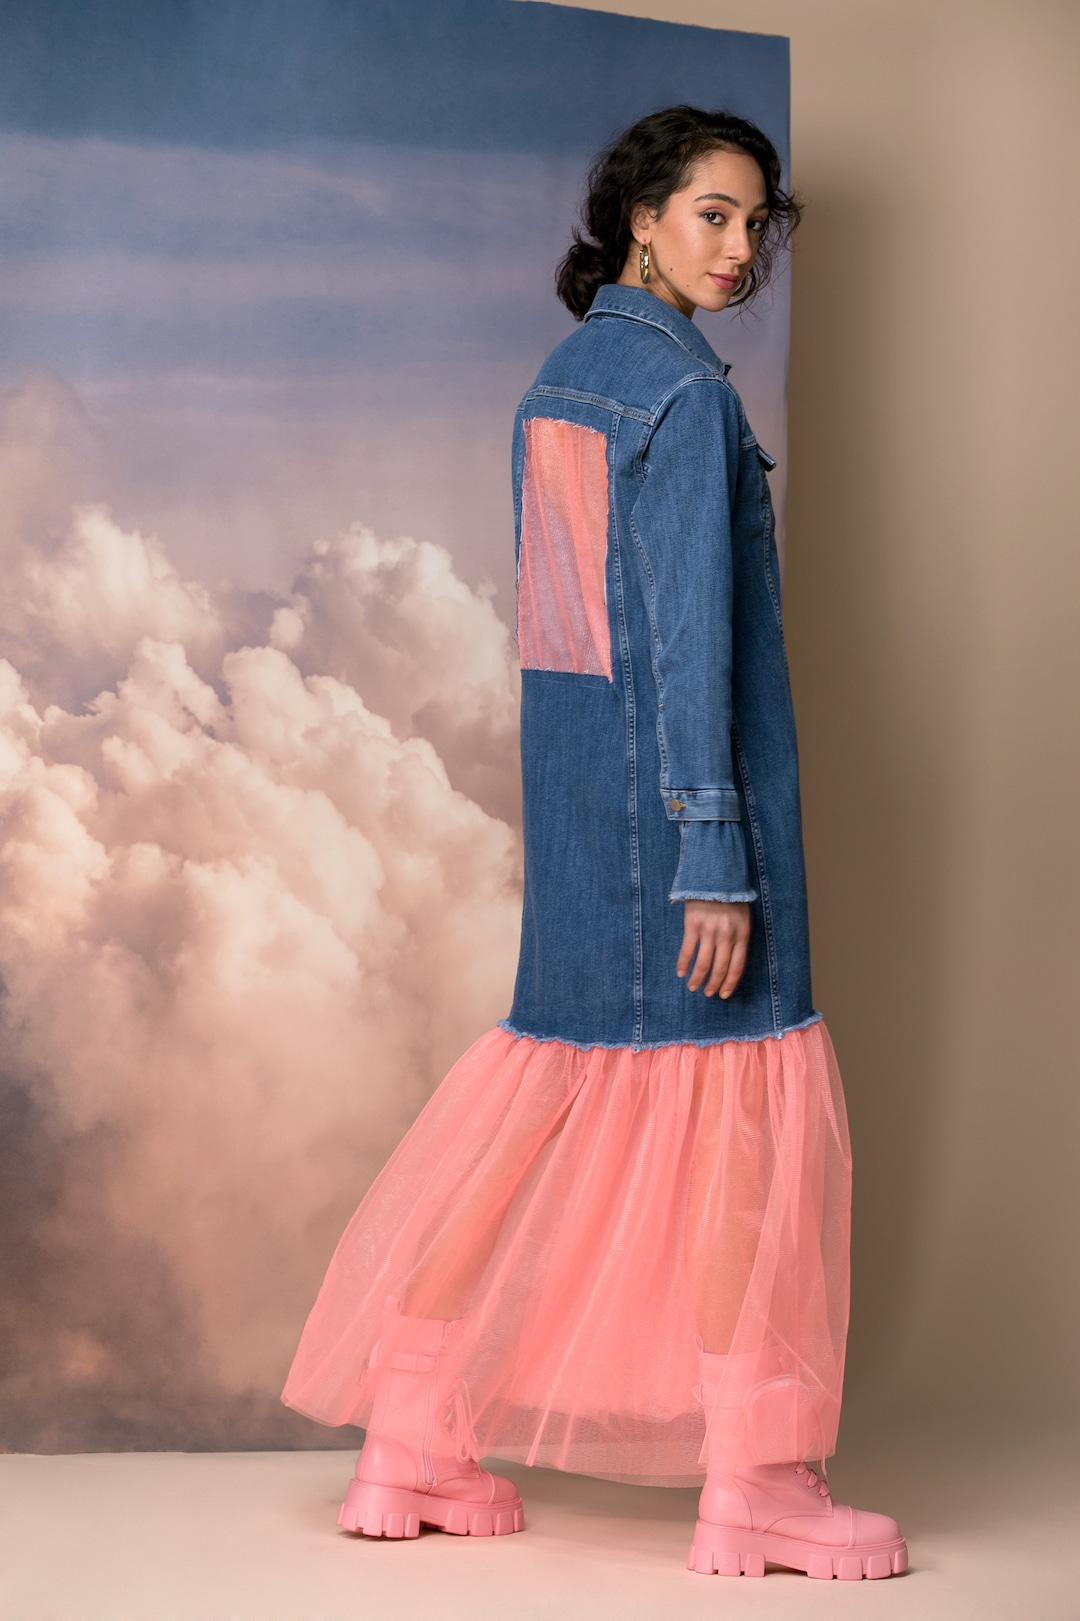 Ali's Fashion Sense: Denim Jacket + Tulle Skirt